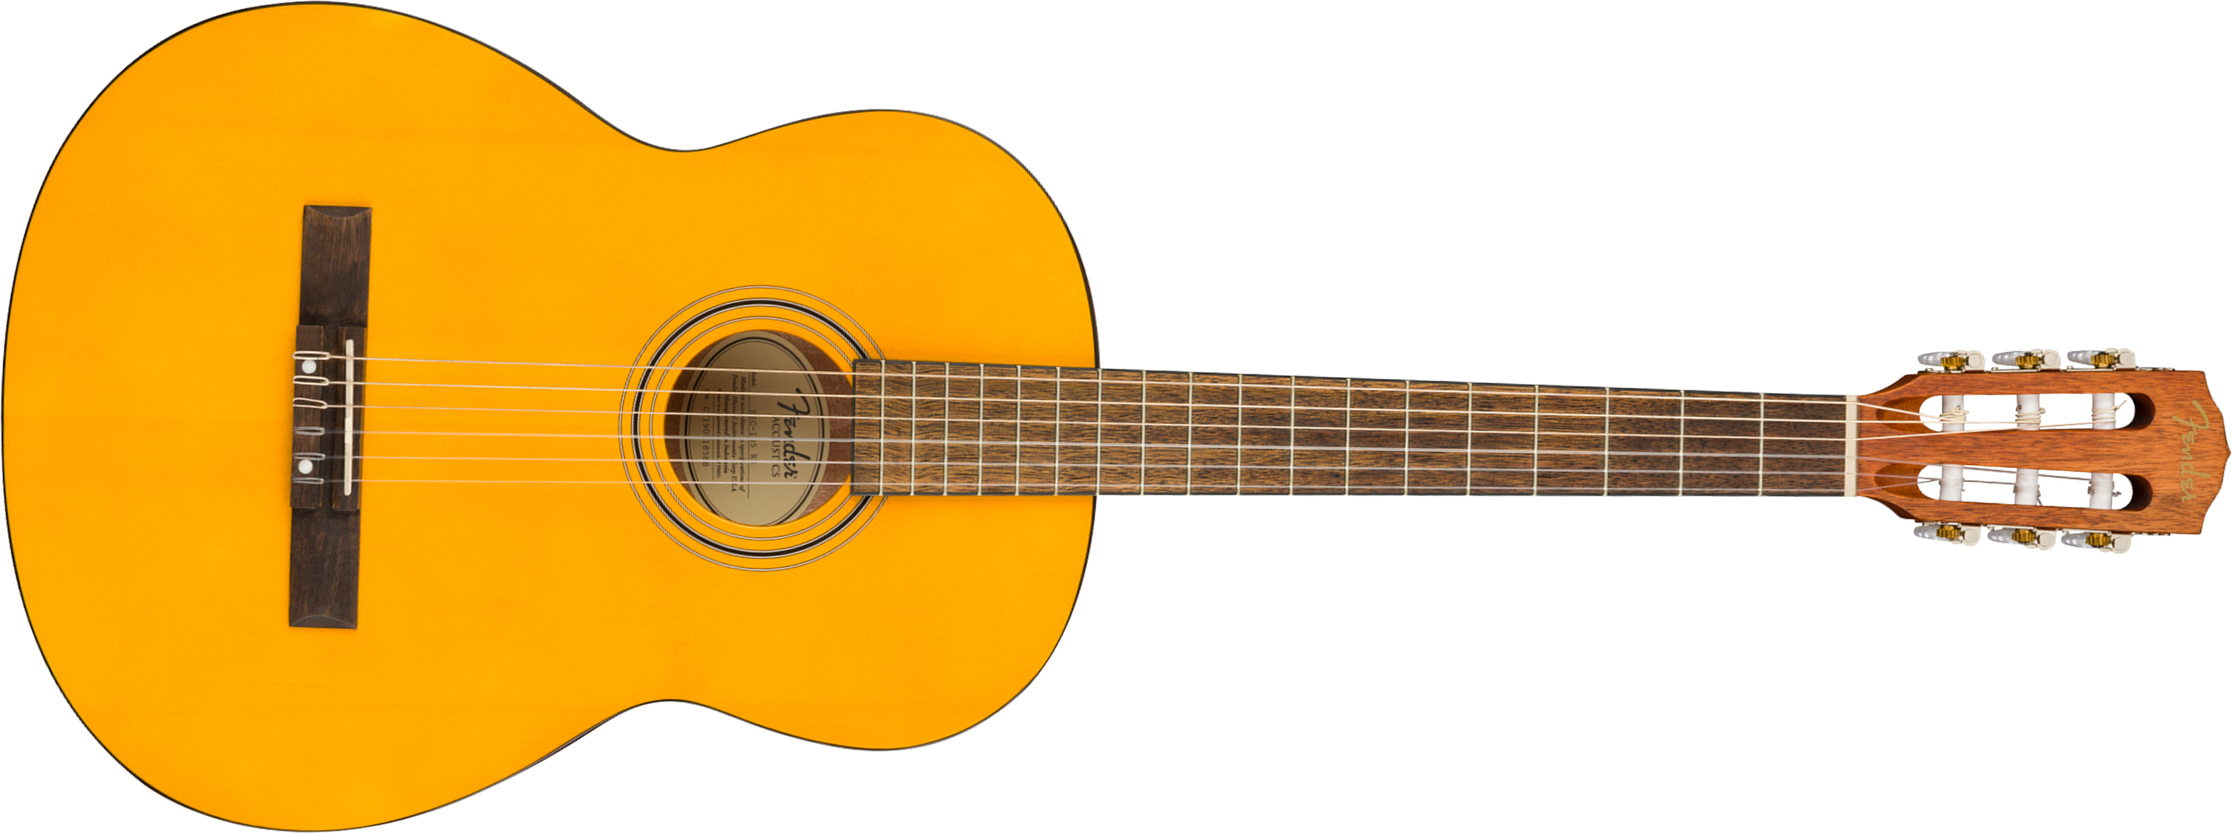 Fender Esc-105 Classical Educational Tout Okoume Noy - Vintage Natural Satin - Classical guitar 4/4 size - Main picture